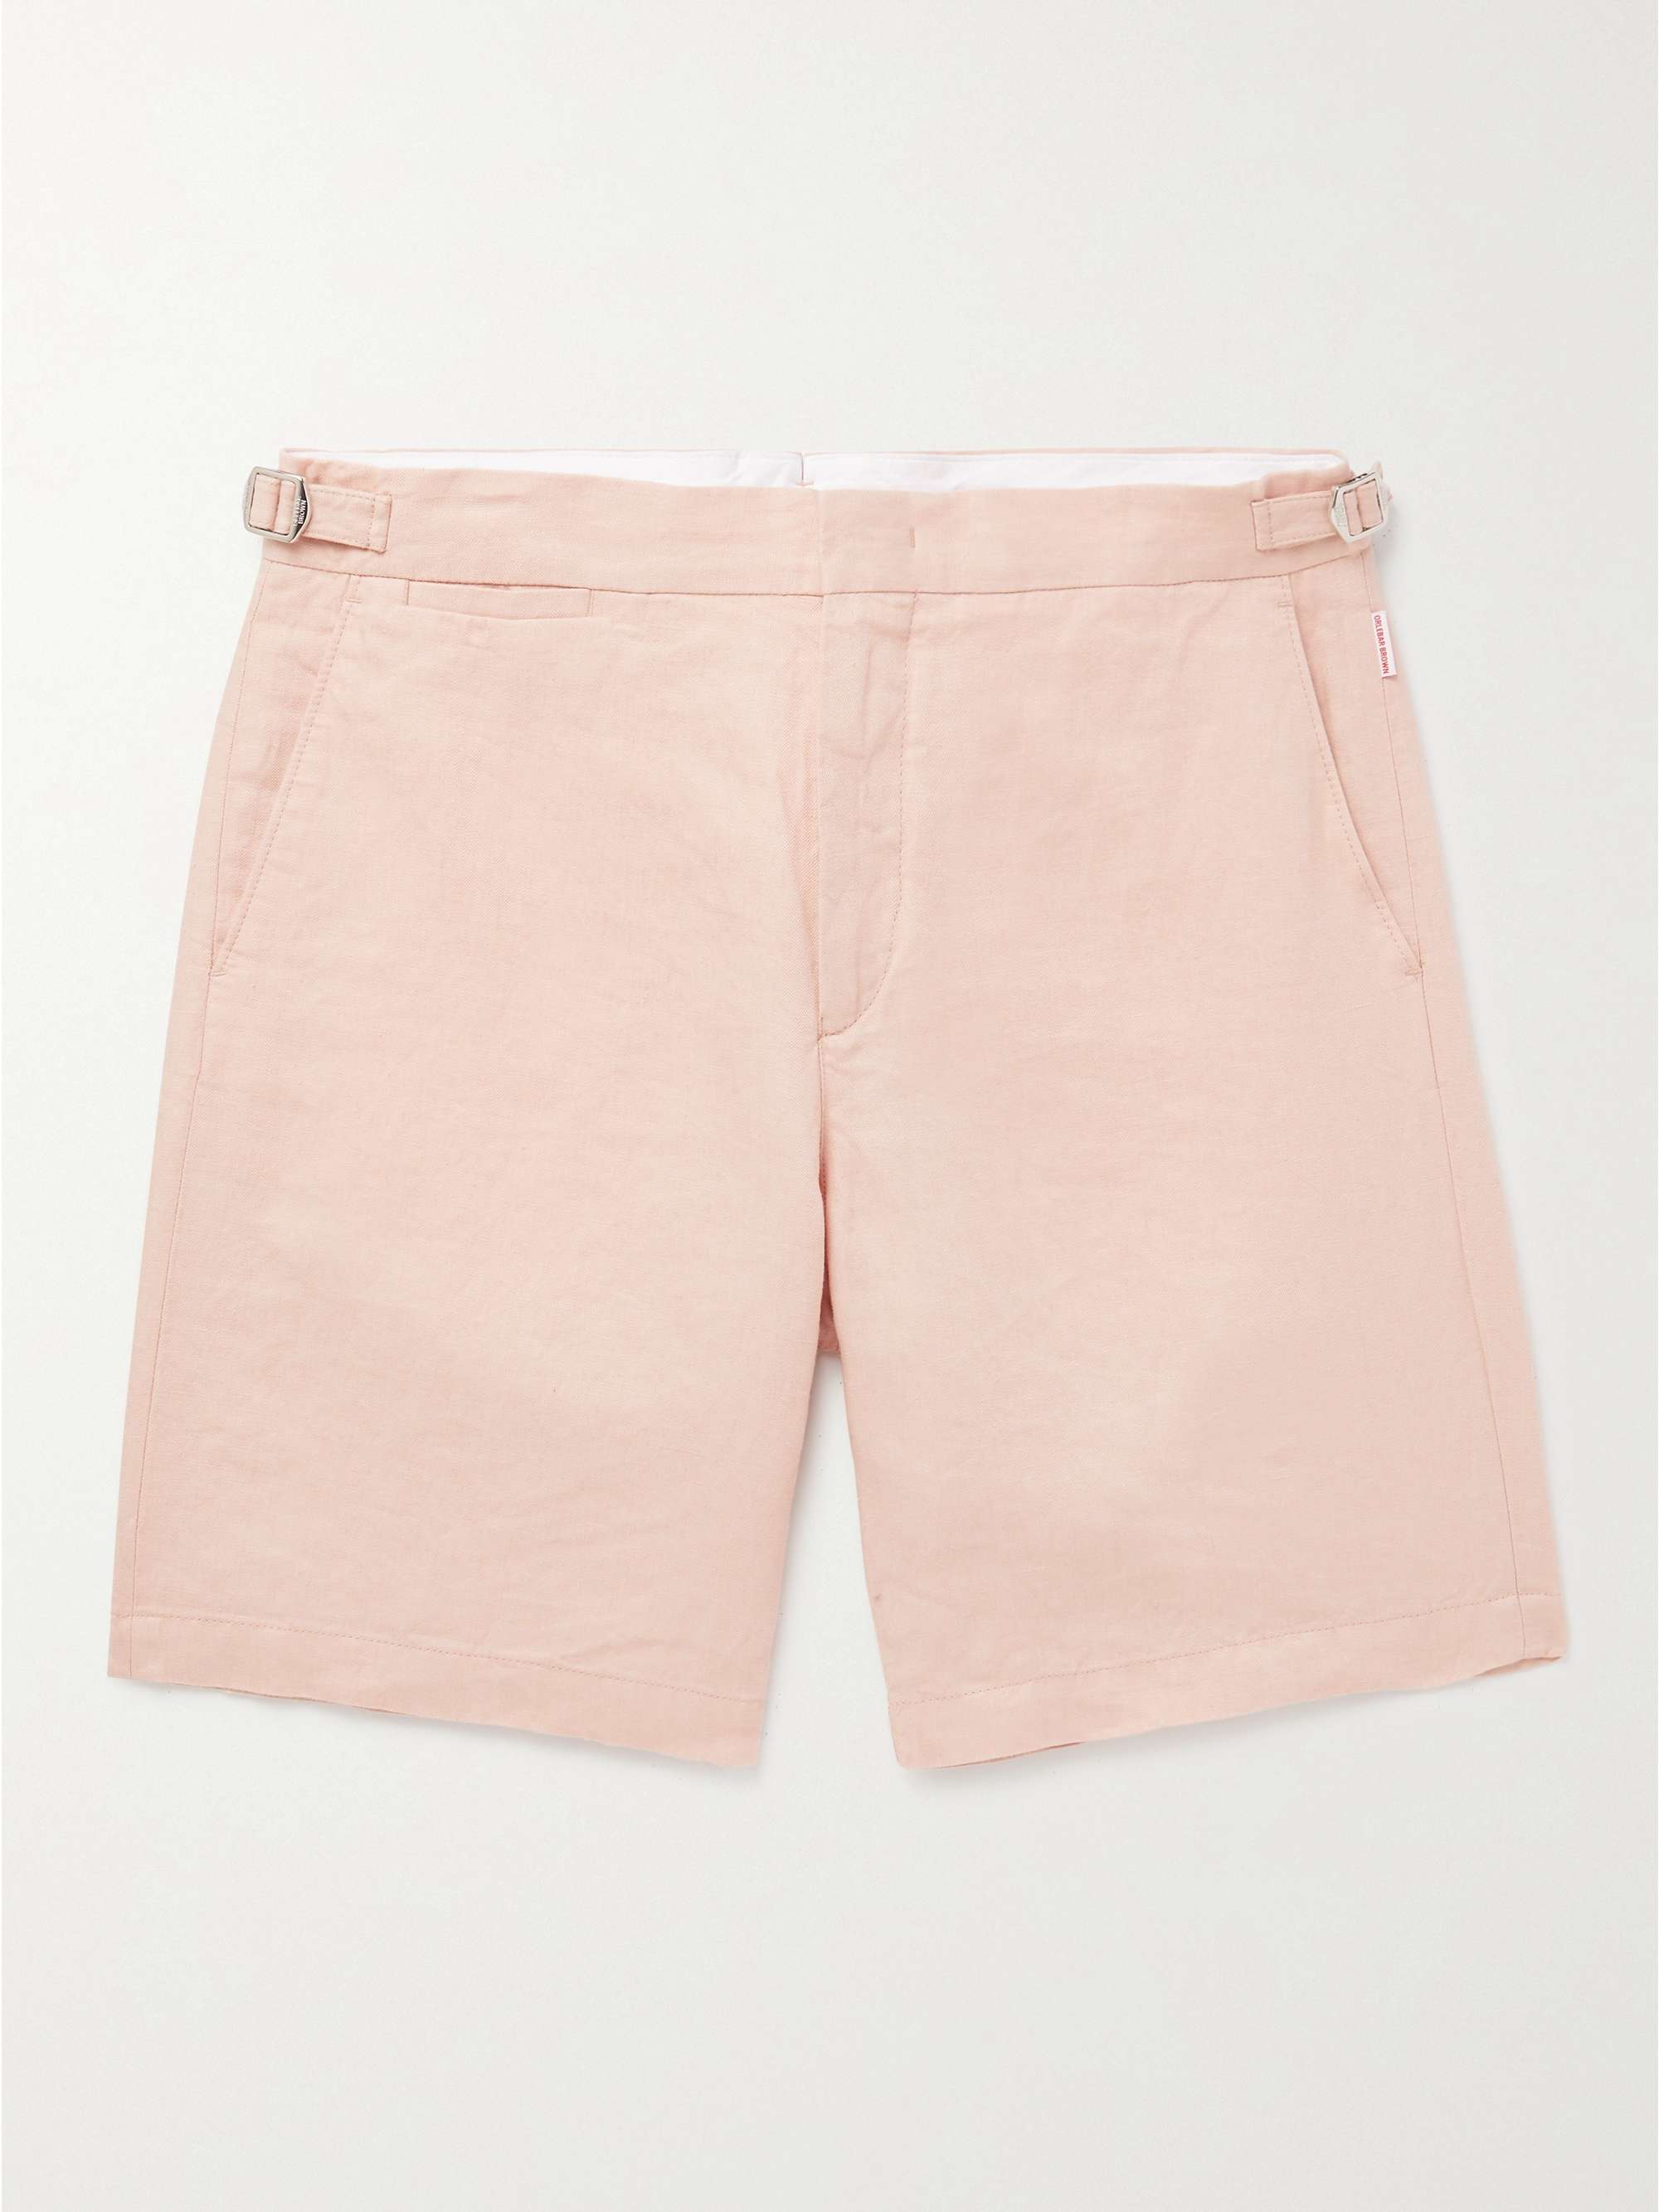 ORLEBAR BROWN Norwich Slim-Fit Linen Shorts